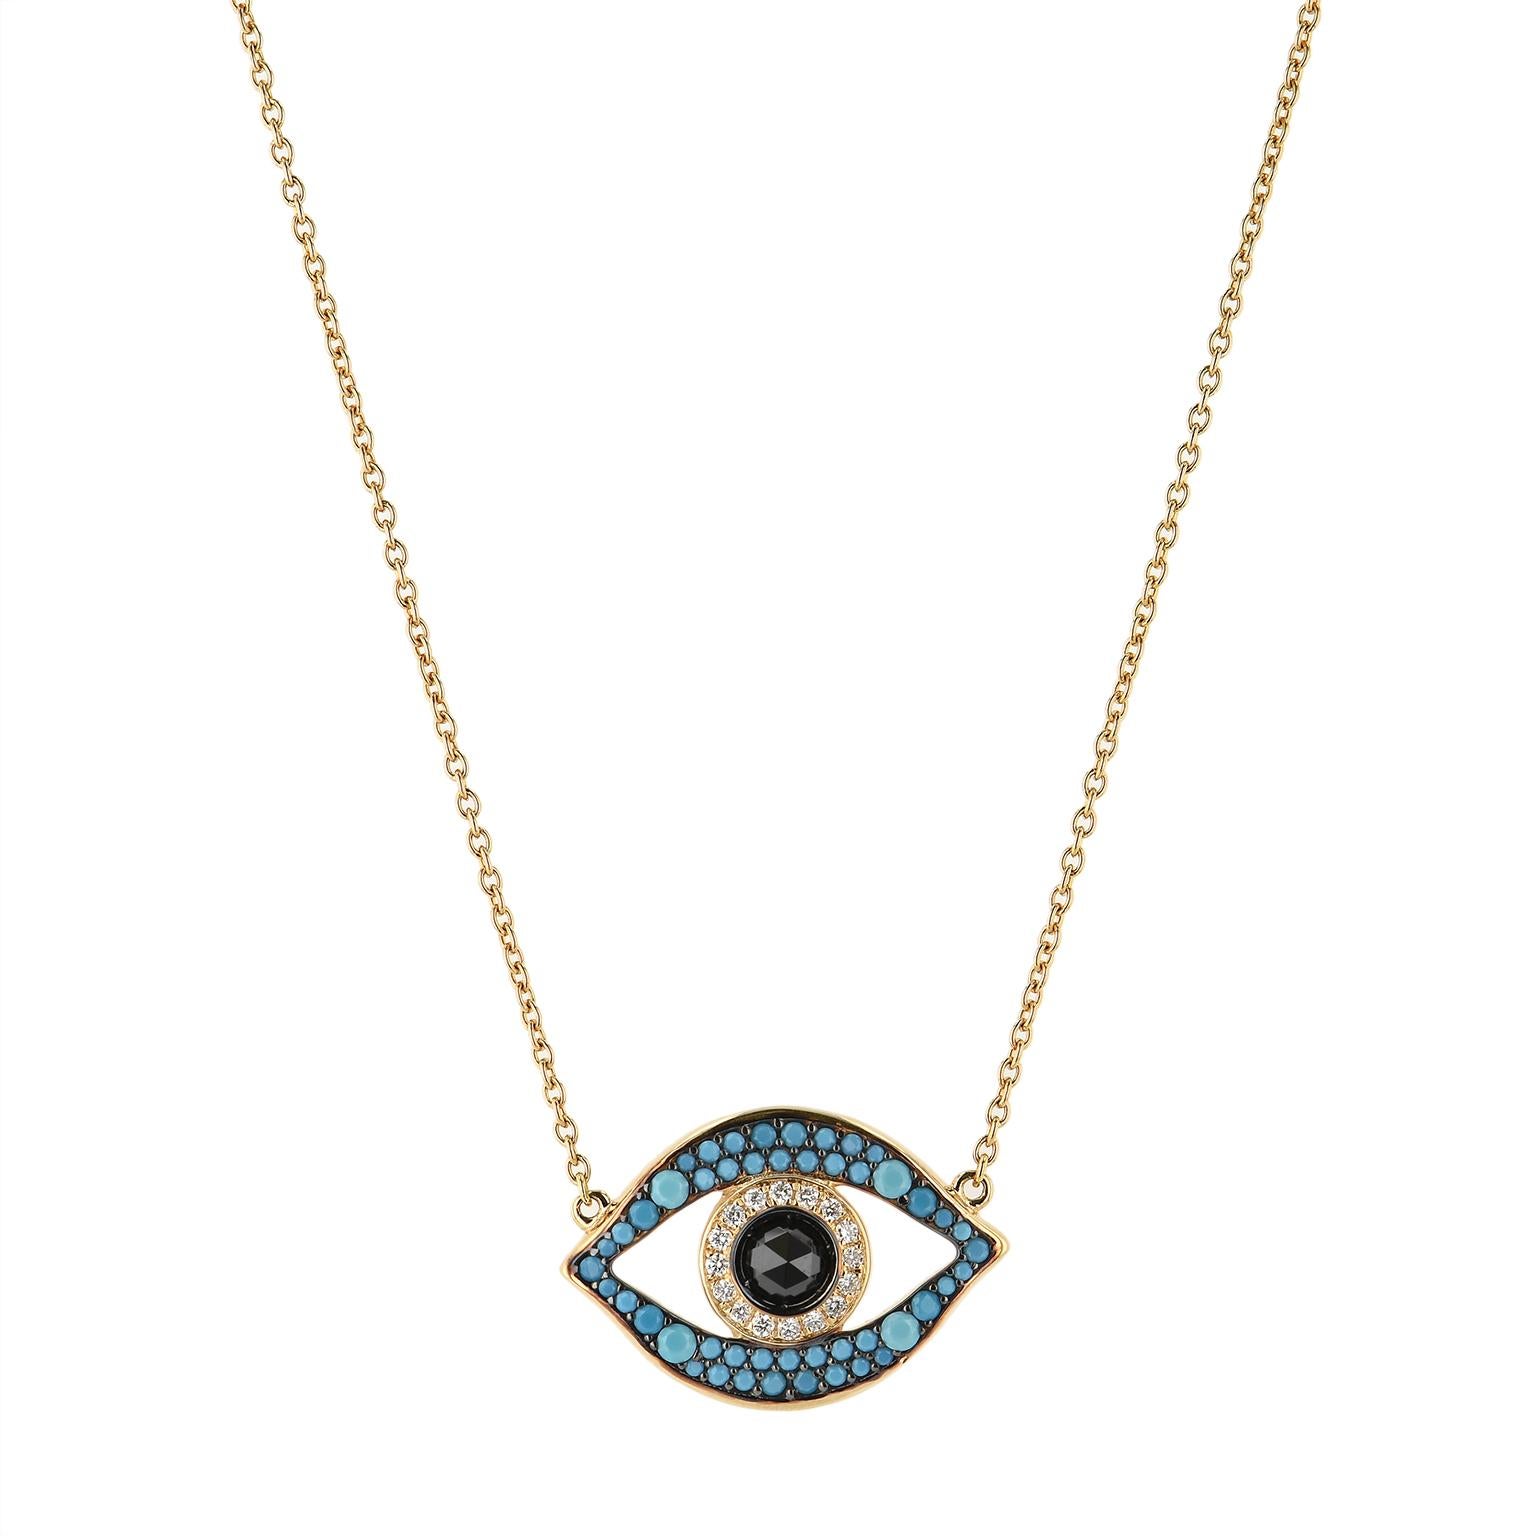 Turquoise, Zircon and Diamond Evil Eye Pendant Set in 14 karat Gold 16-17 inches